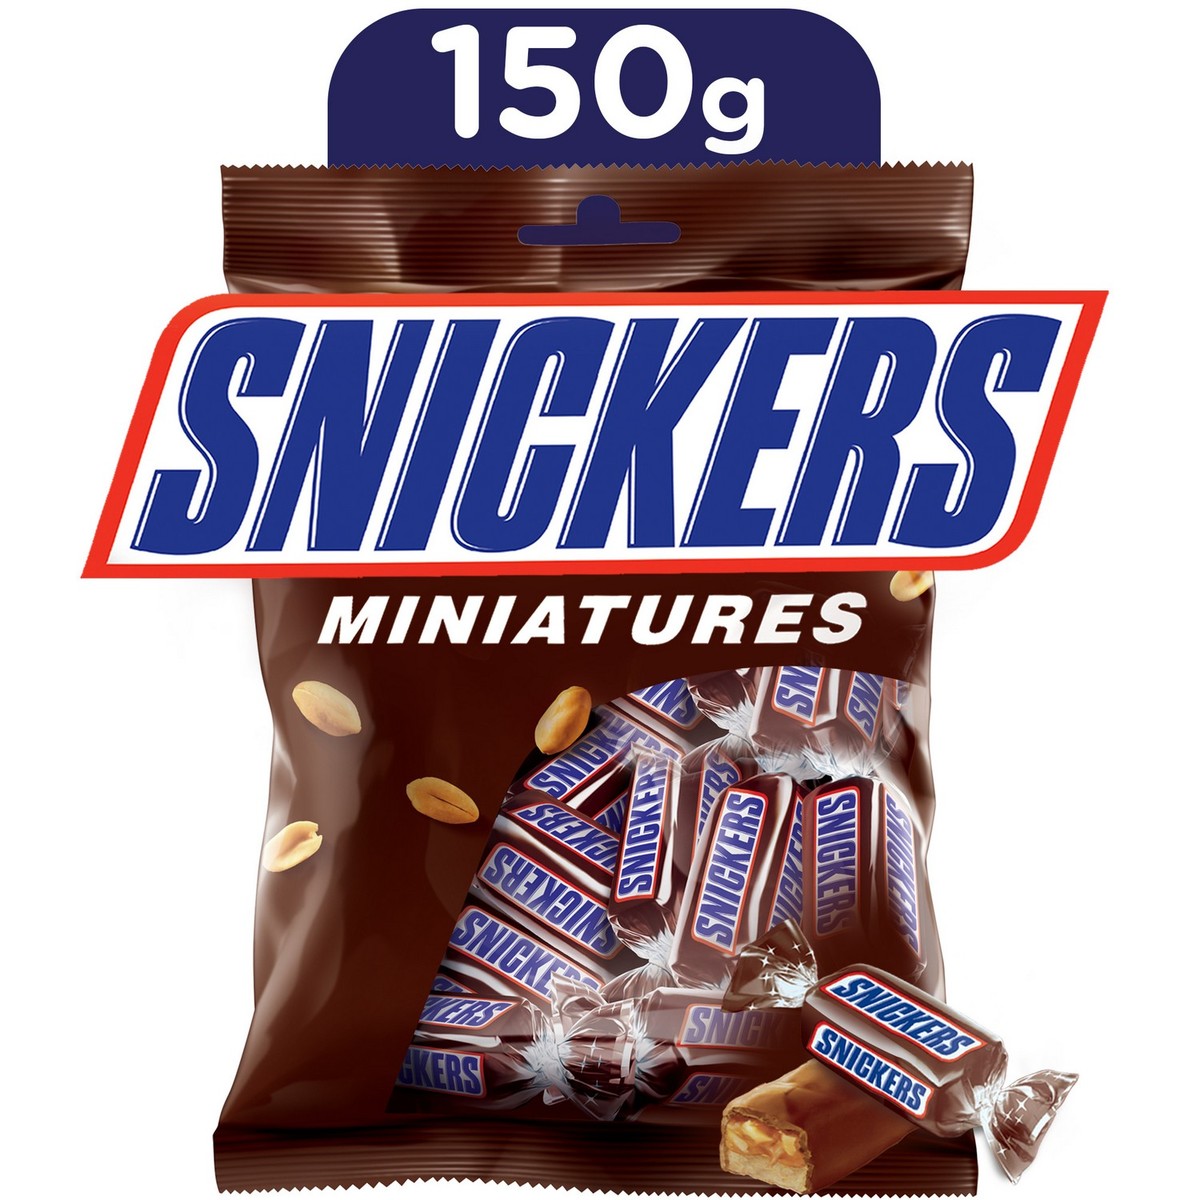 Snickers Miniatures Chocolate Mini Bars 150g